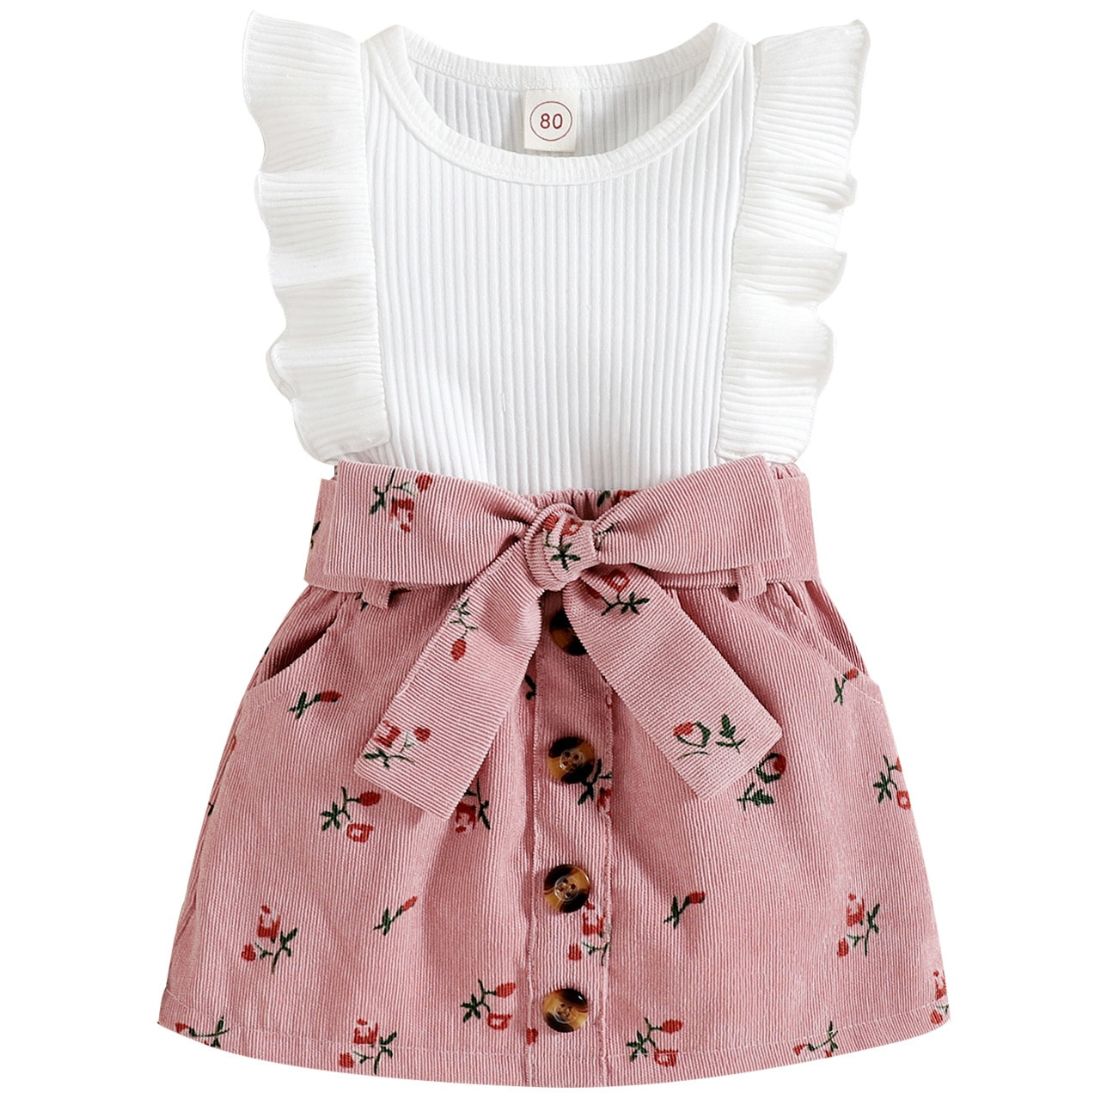 Ruffled Pink Floral Skirt Toddler Clothing Set